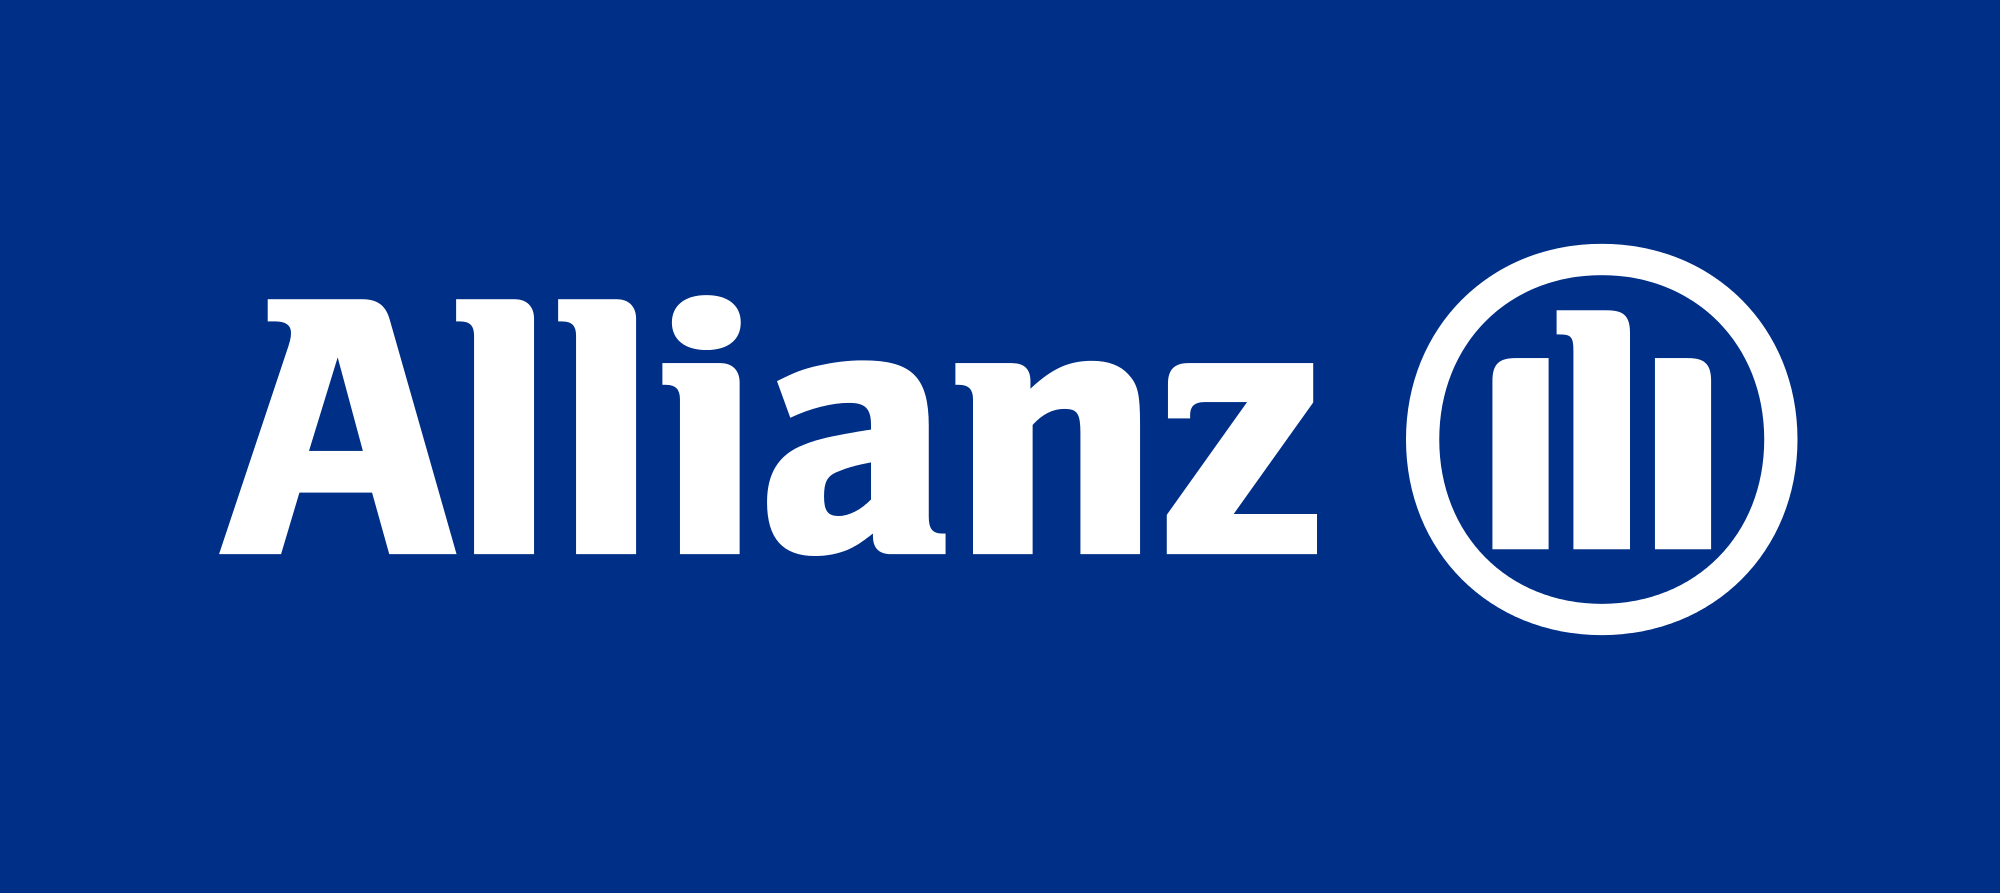 Allianz Logo and HQ Wallpaper. Full HD Picture